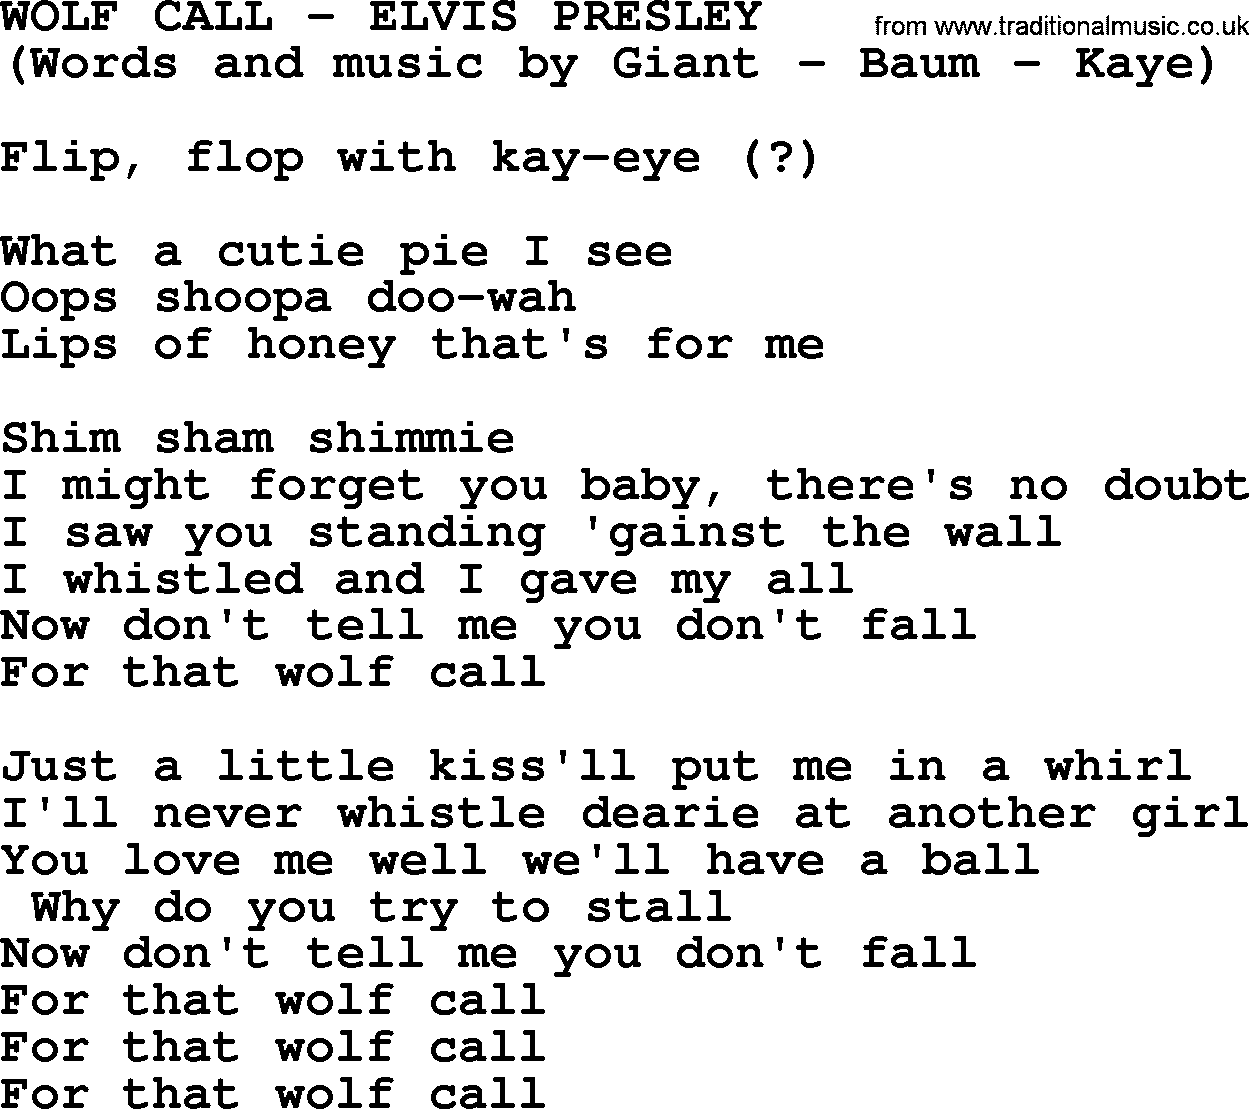 Elvis Presley song: Wolf Call lyrics